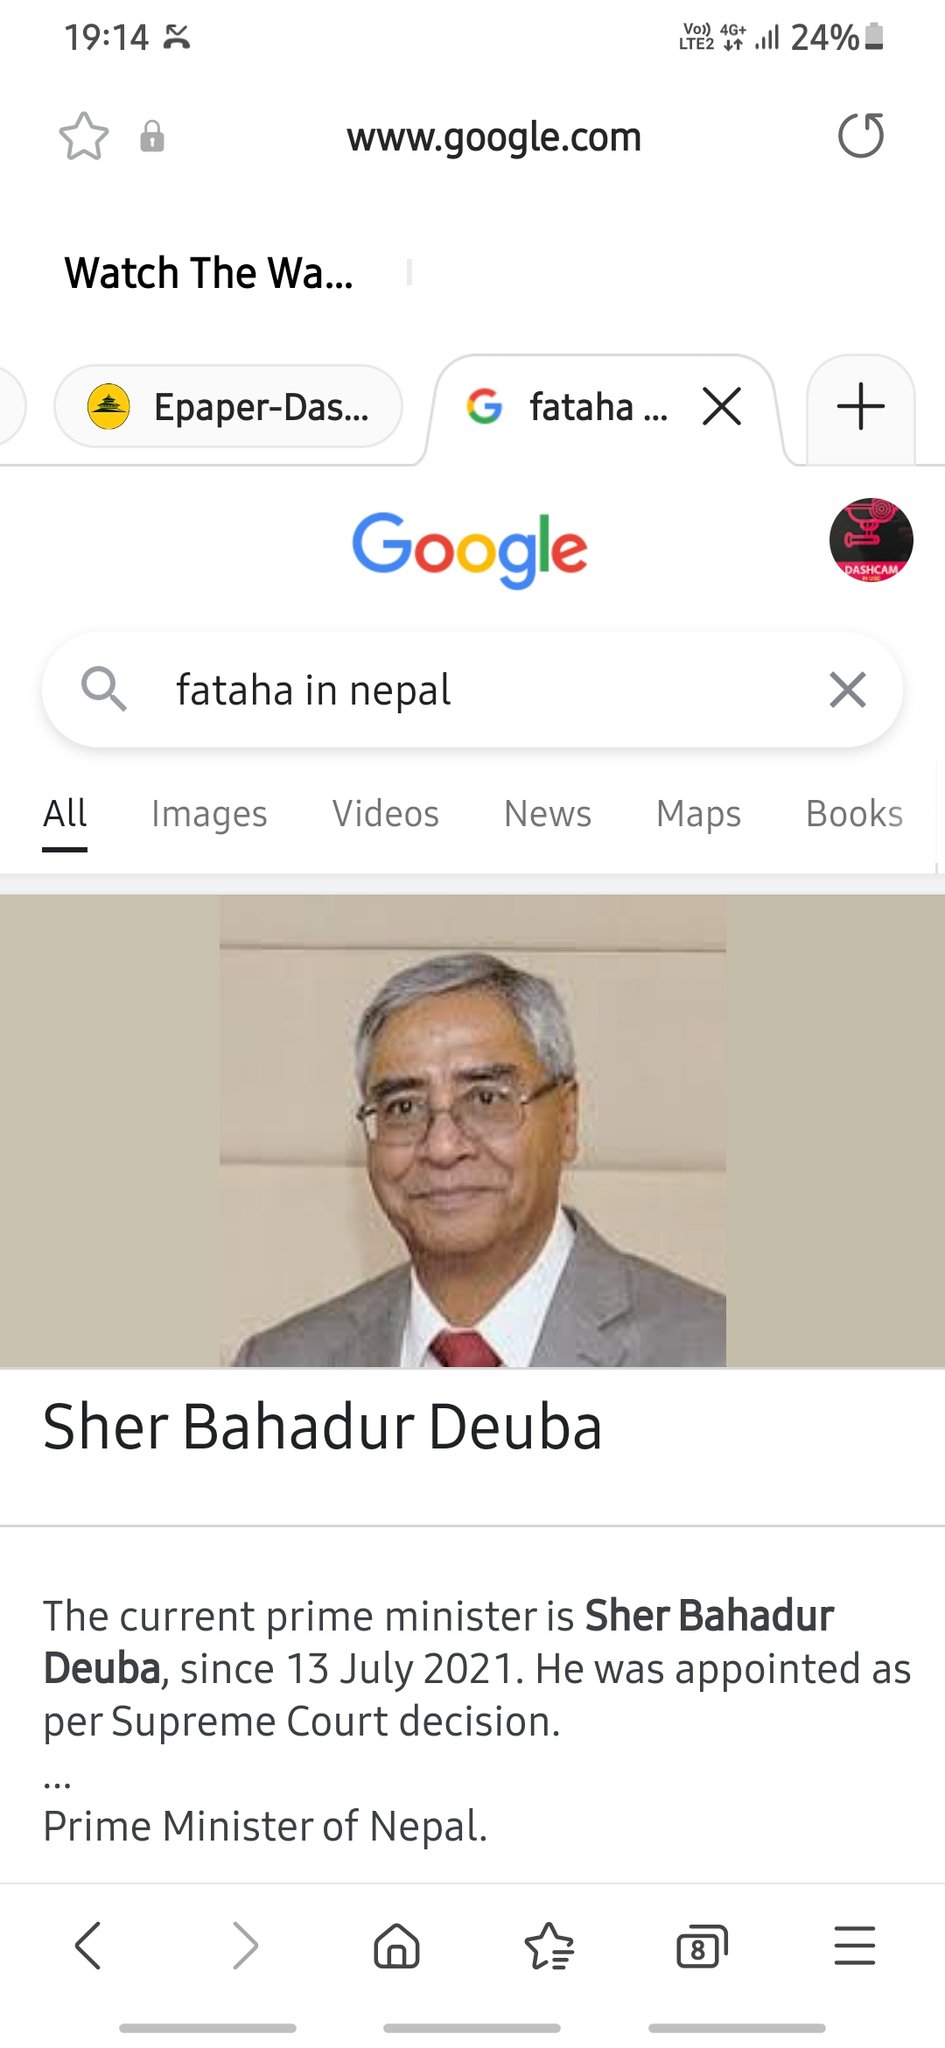 Fataha in nepal